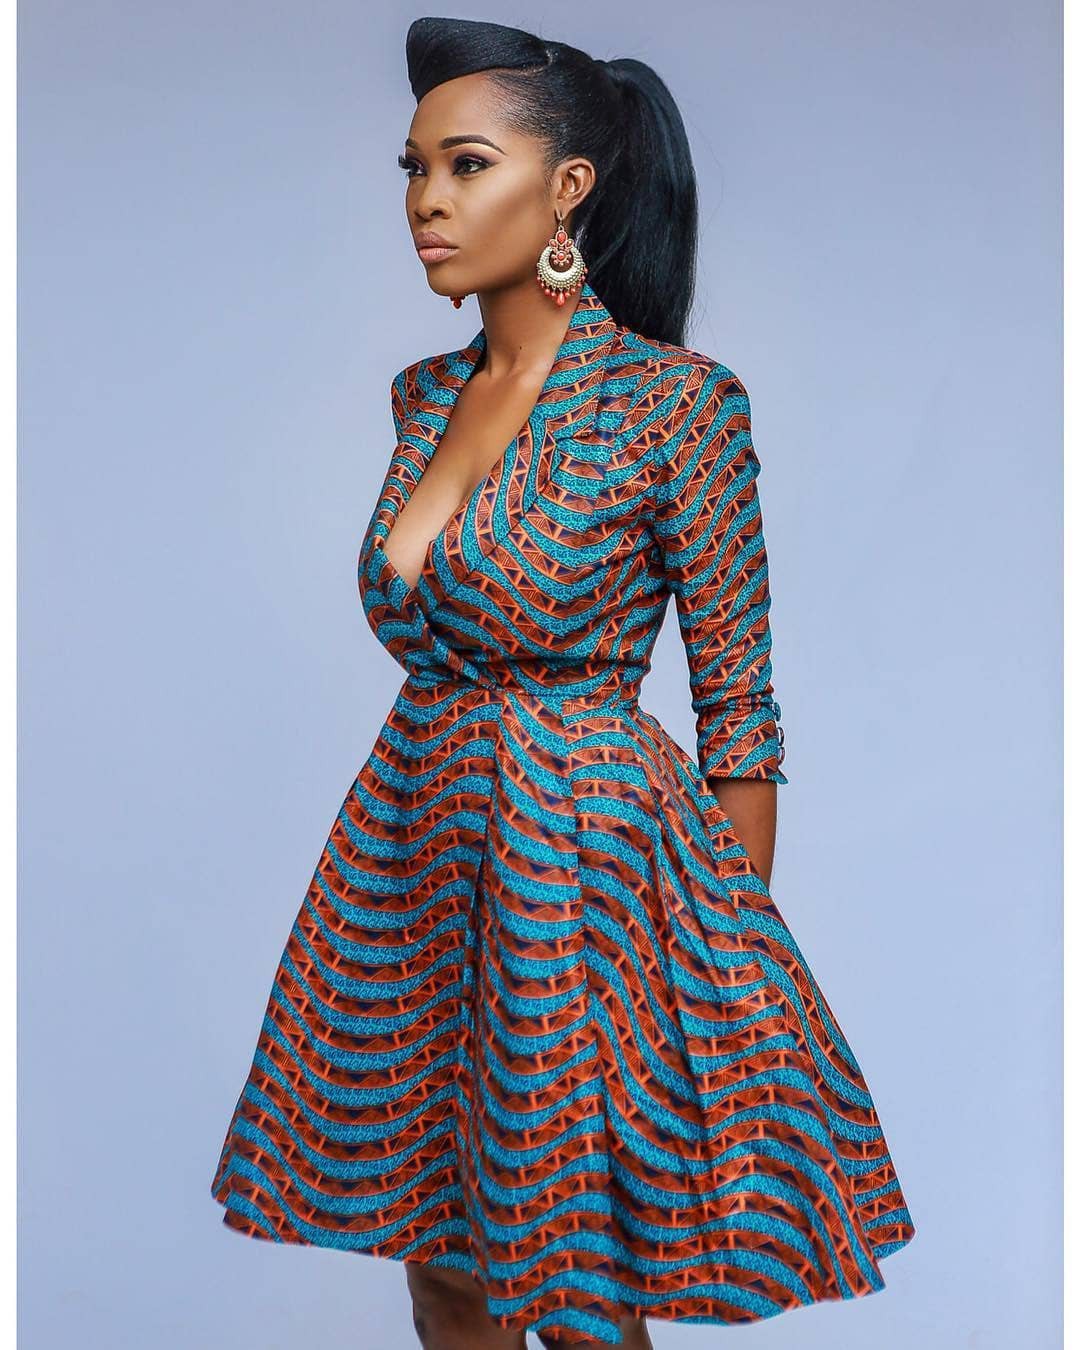 Popular Afro-American Apparel Ideas For Black Ladies: Ankara Dresses,  Ankara Fashion,  Ankara Outfits,  African Outfits,  Ankara Inspirations,  Asoebi Special  